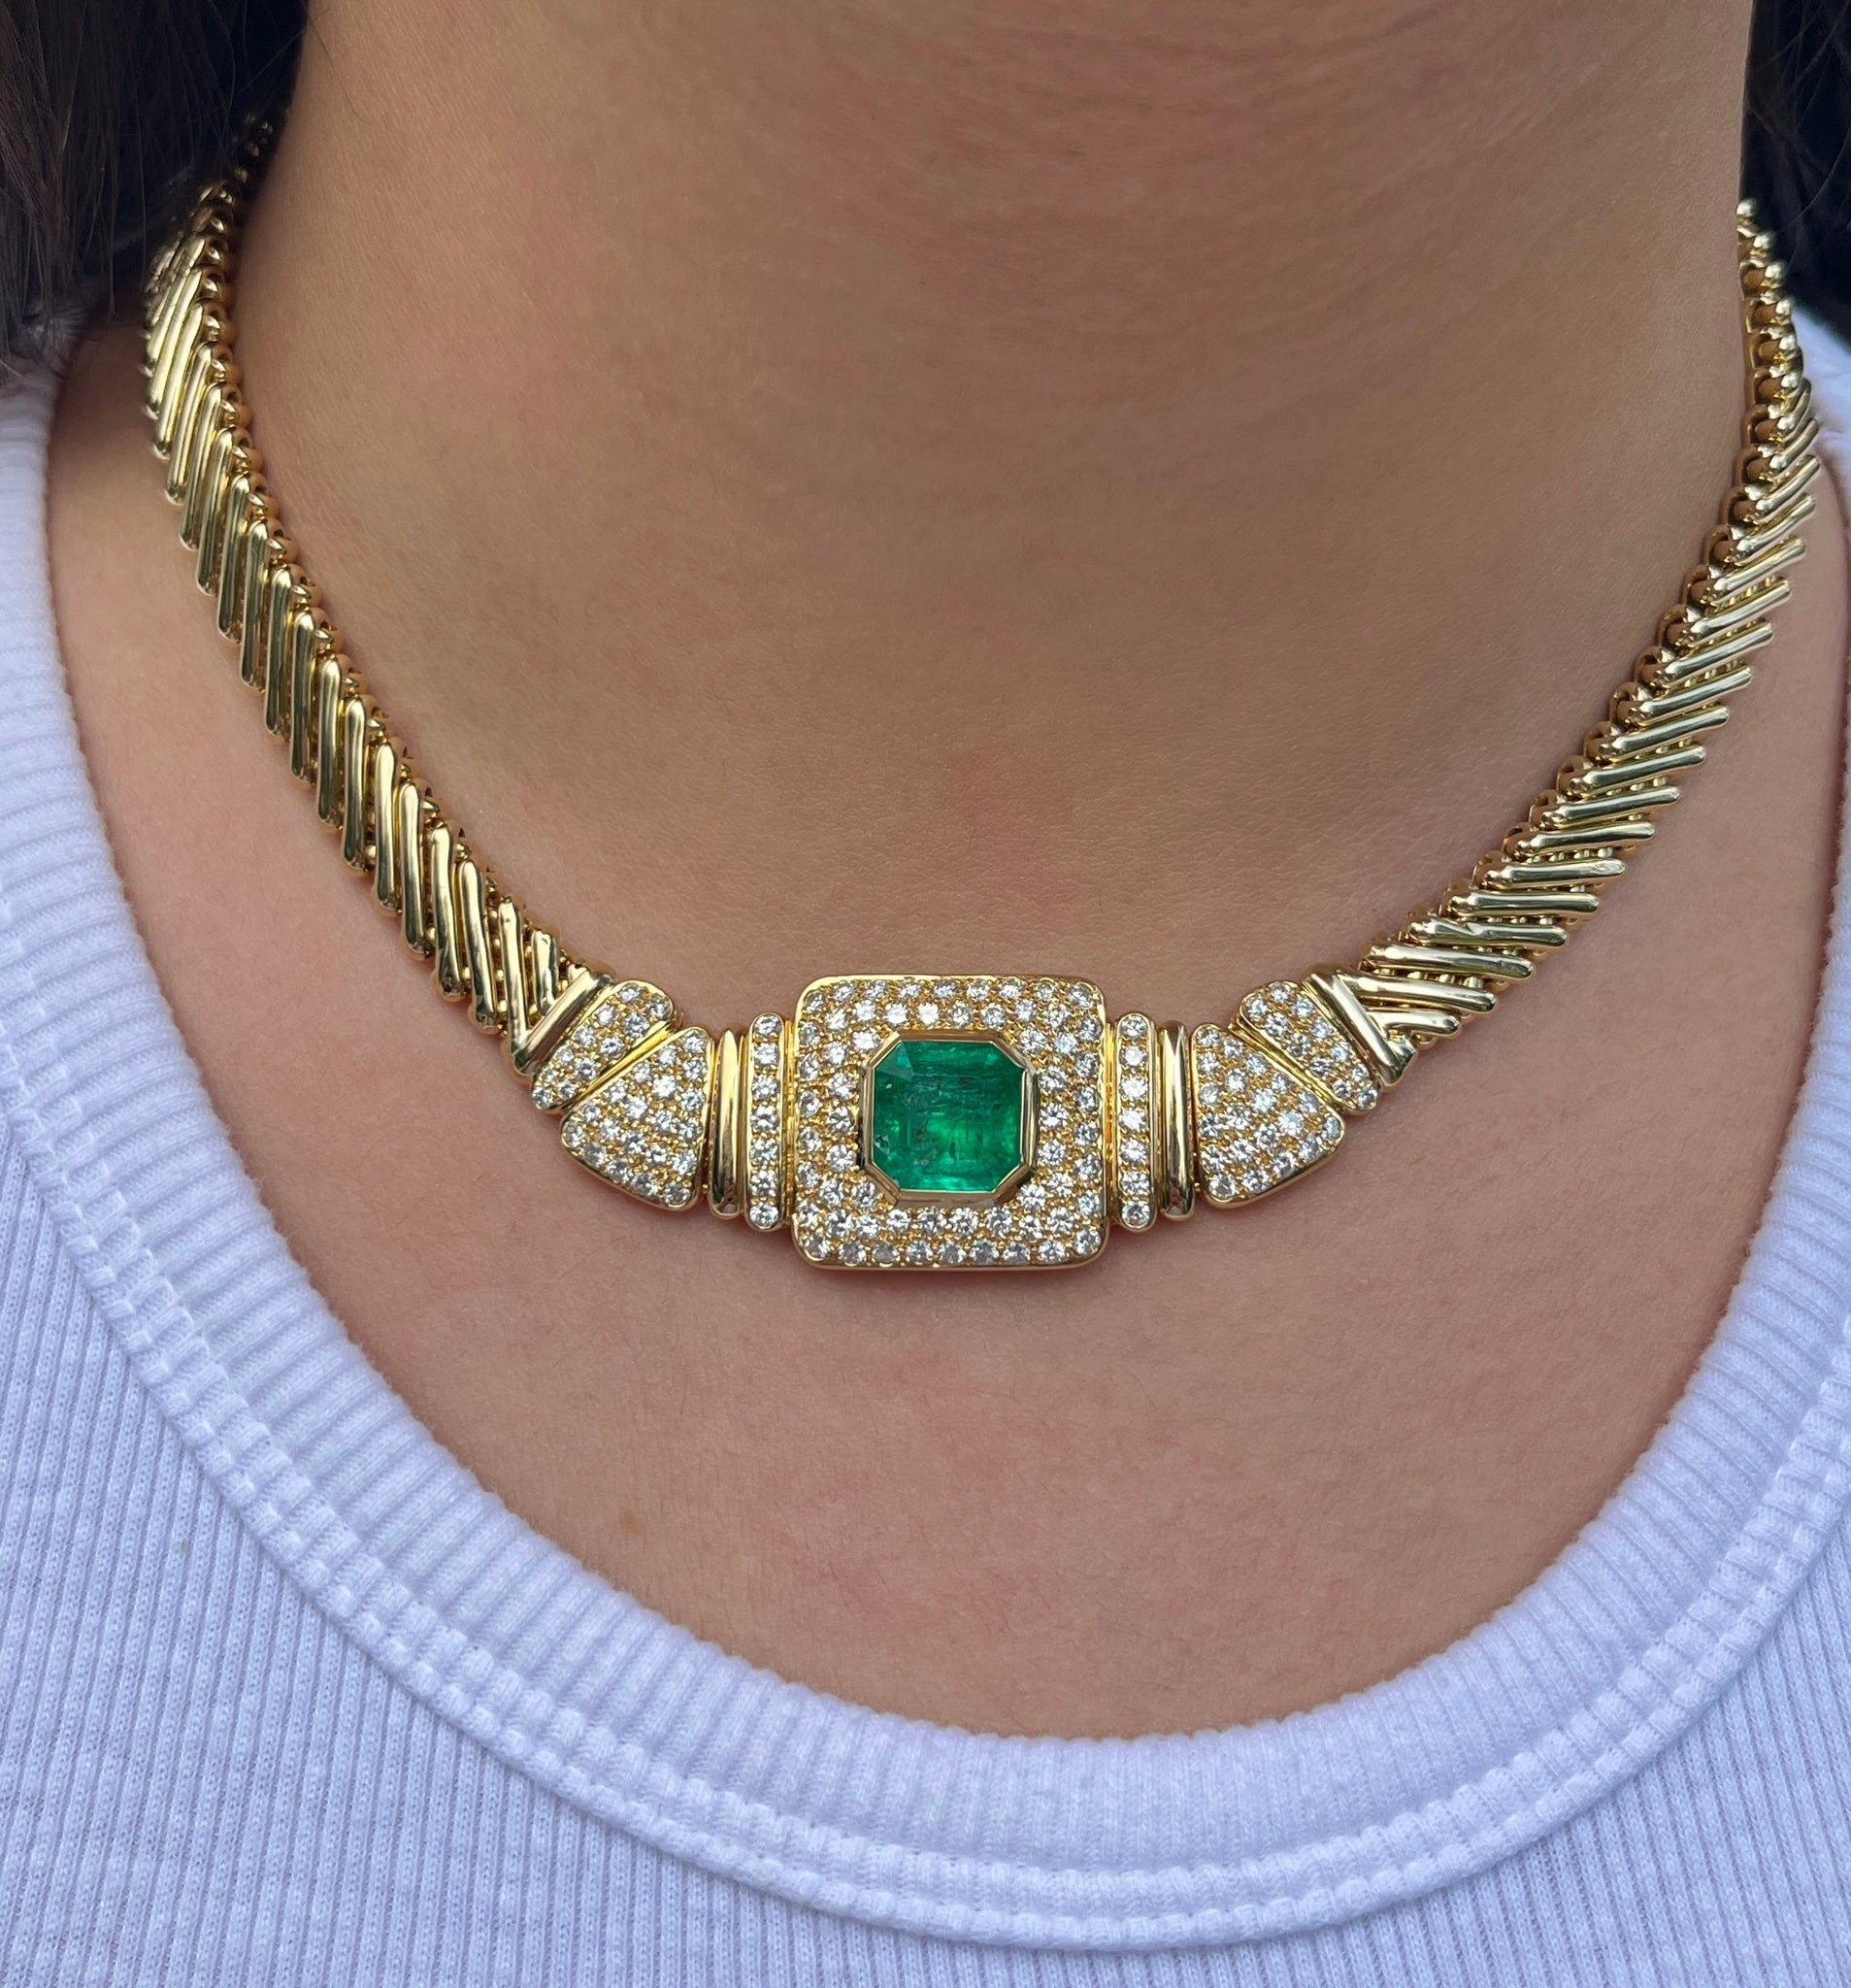 6 Carat Natural Colombian Emerald and Diamond Choker Necklace 18 Karat Yellow Gold-Necklaces-ASSAY